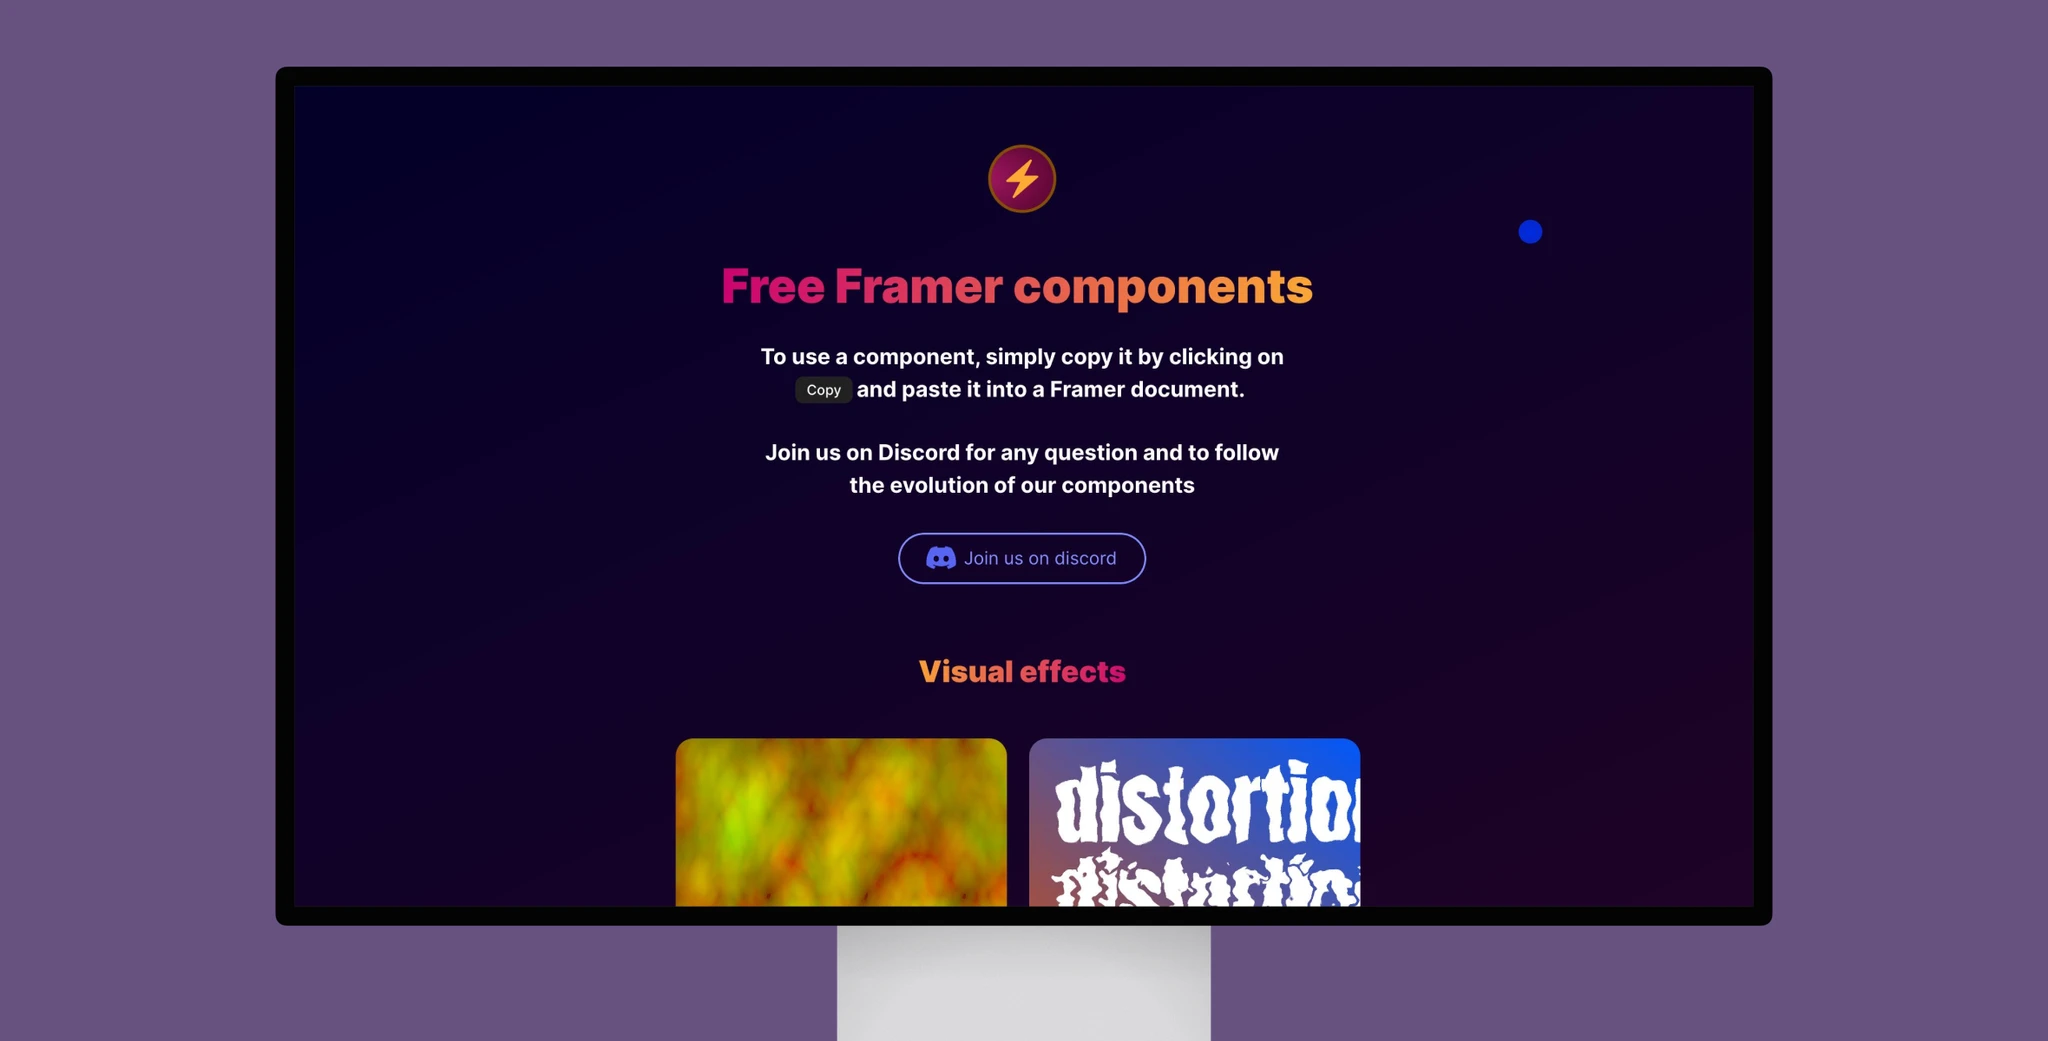 Free Framer Components